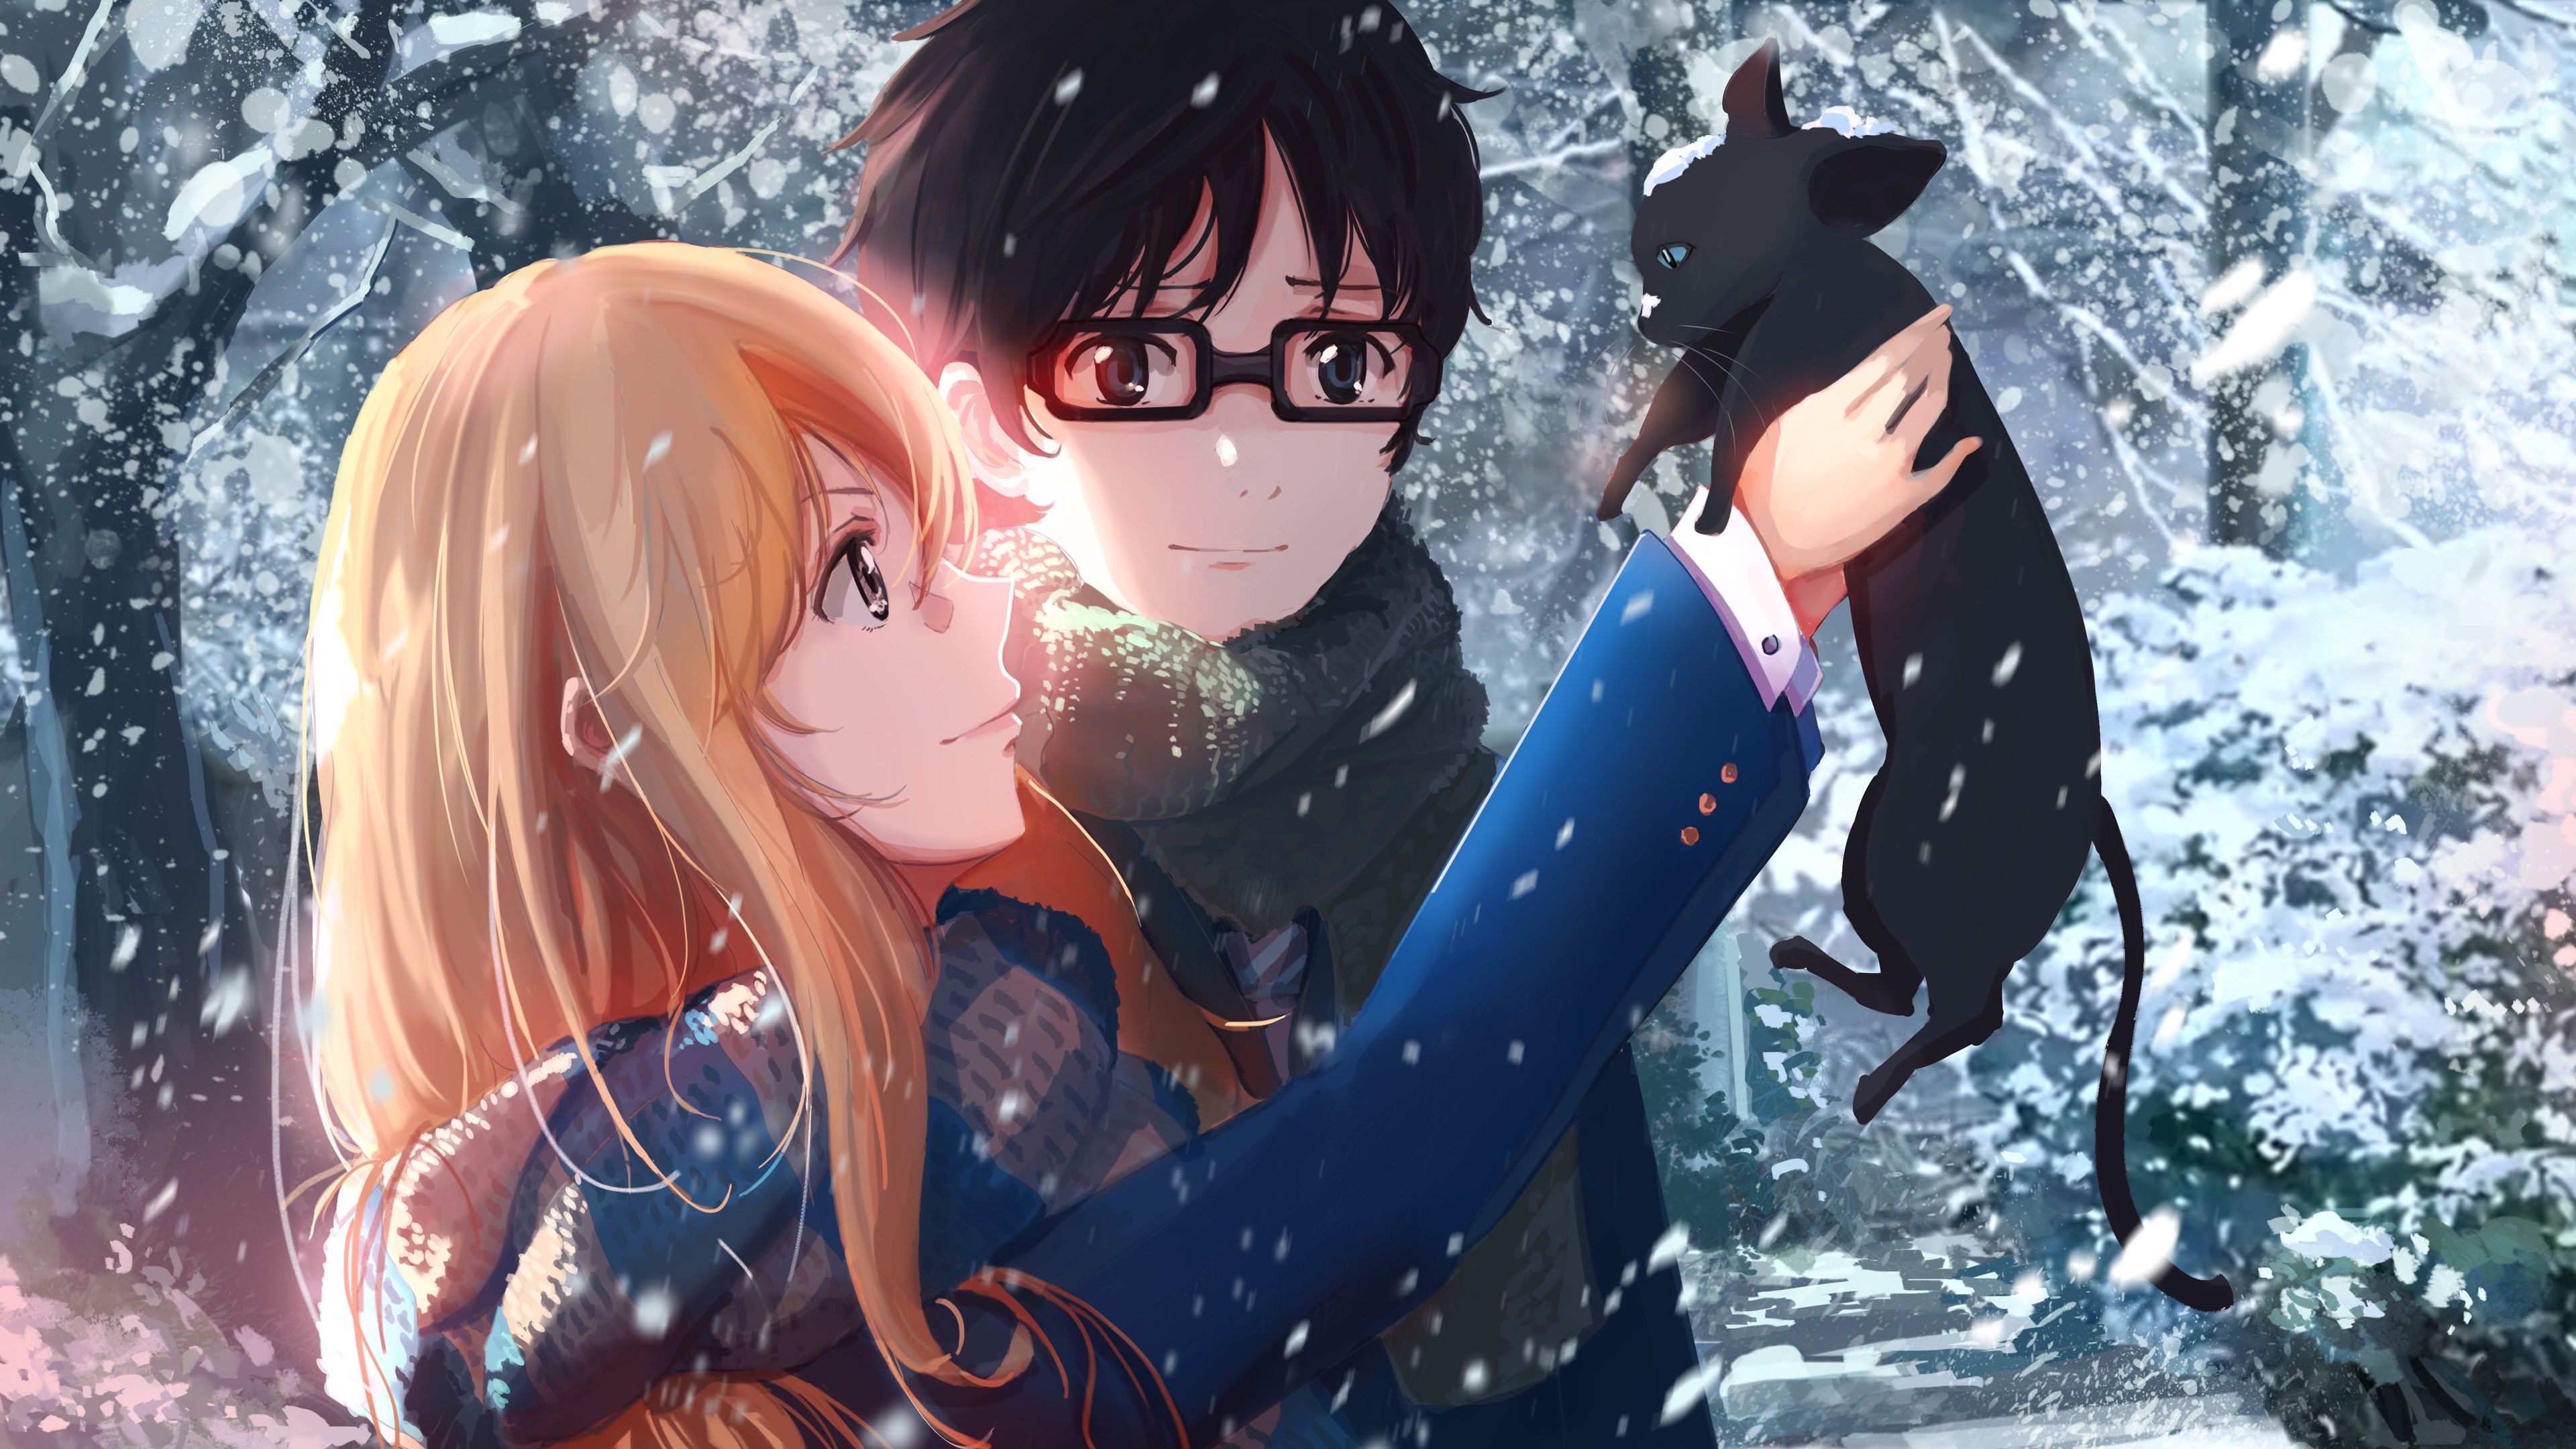 Wallpaper Anime girl and boy in winter, cat, snow 3840x2160 UHD 4K